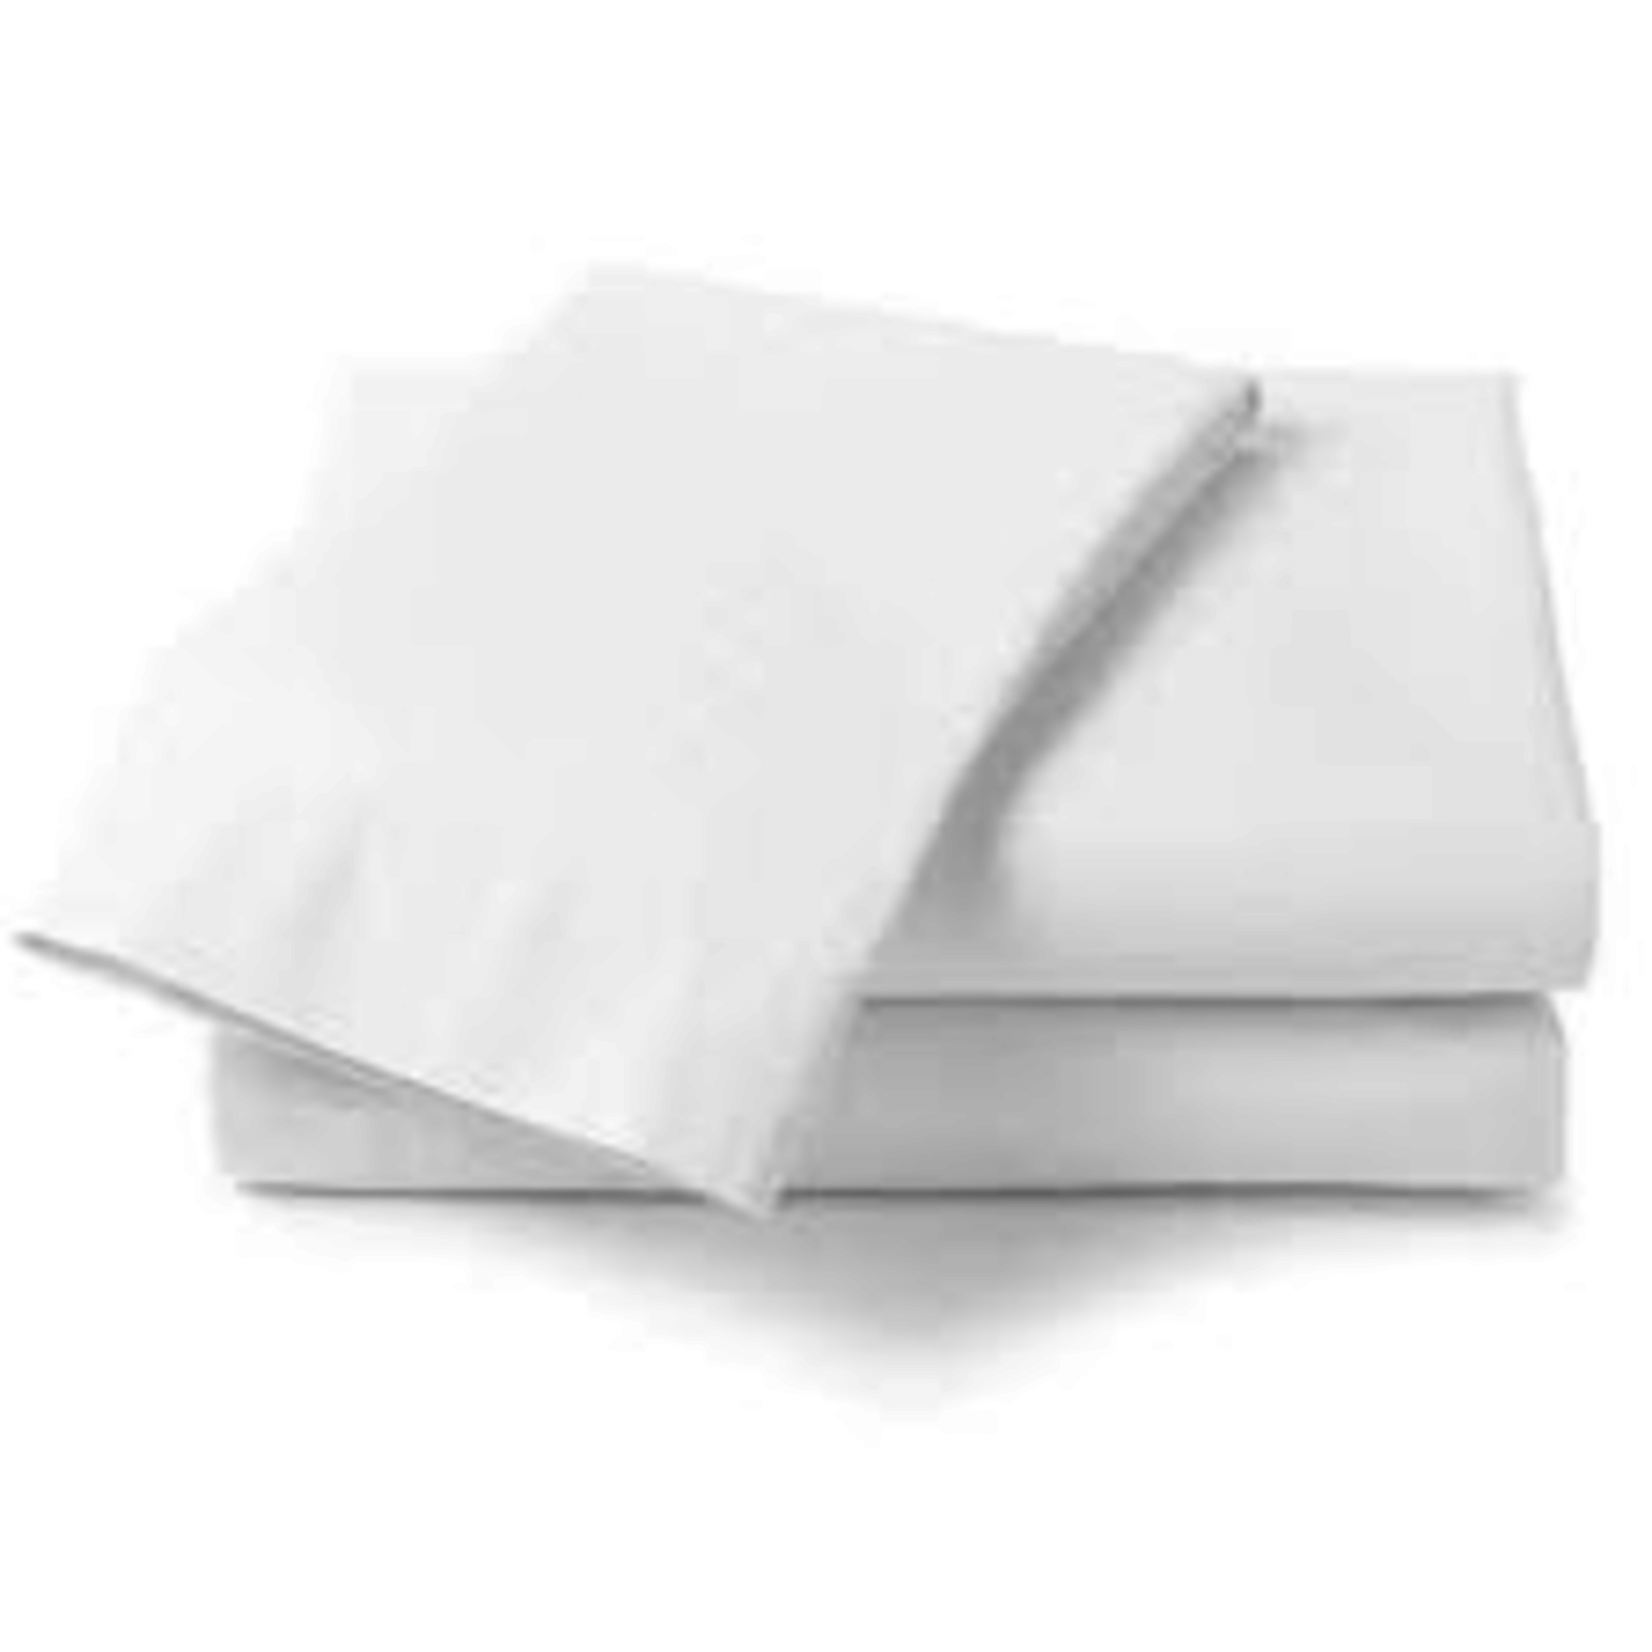 Cuddle Down Percale Deluxe Pillowcase Pair, King, #10 White